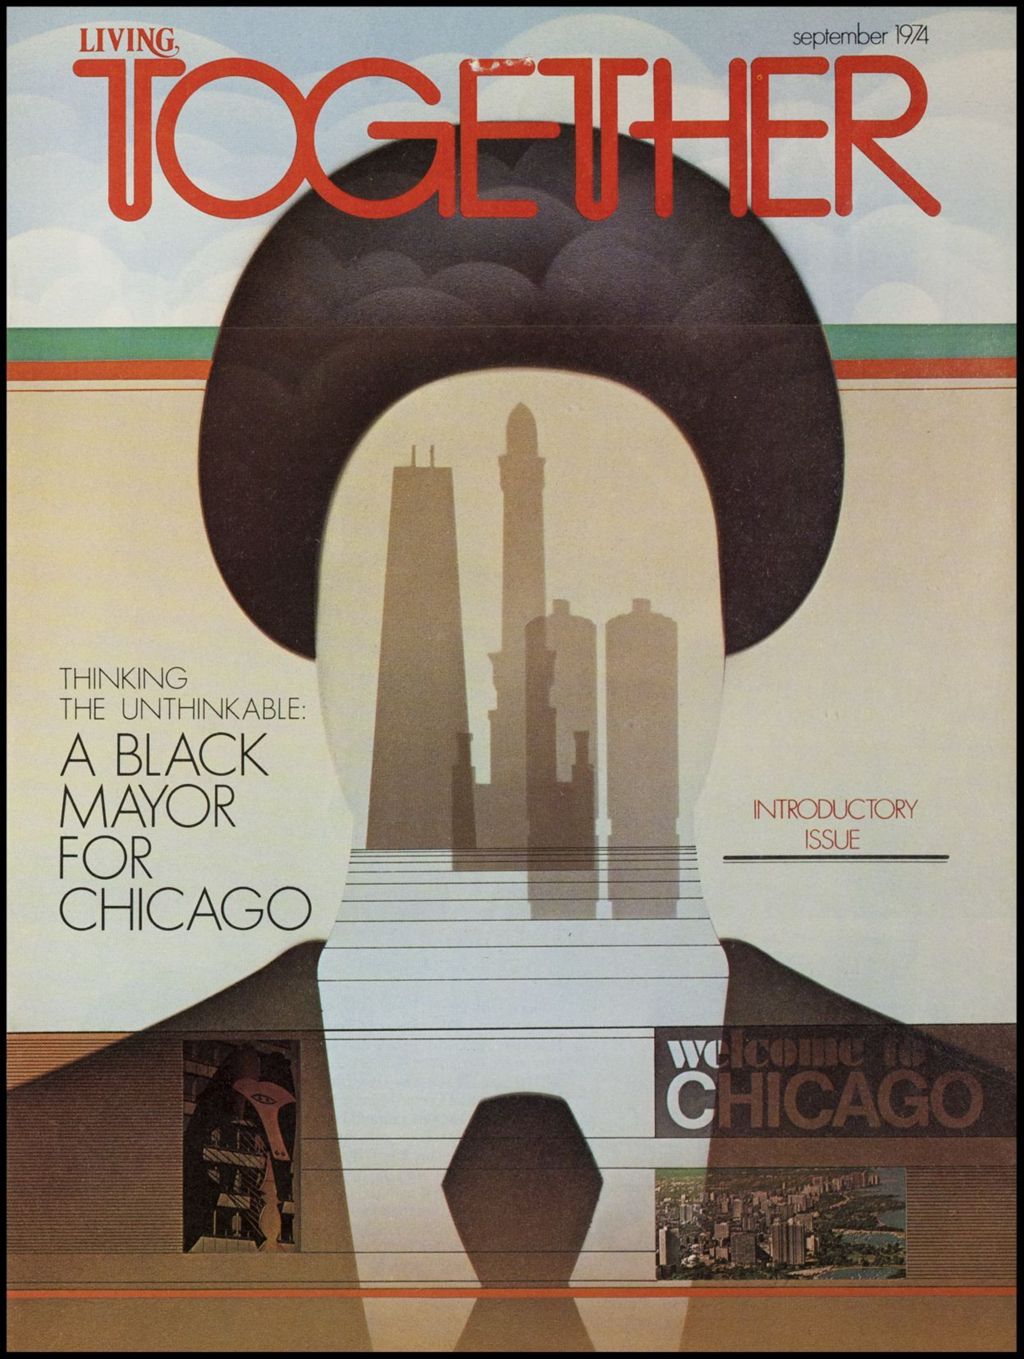 Miniature of Black Mayor for Chicago, 1974 (Folder IV-781)